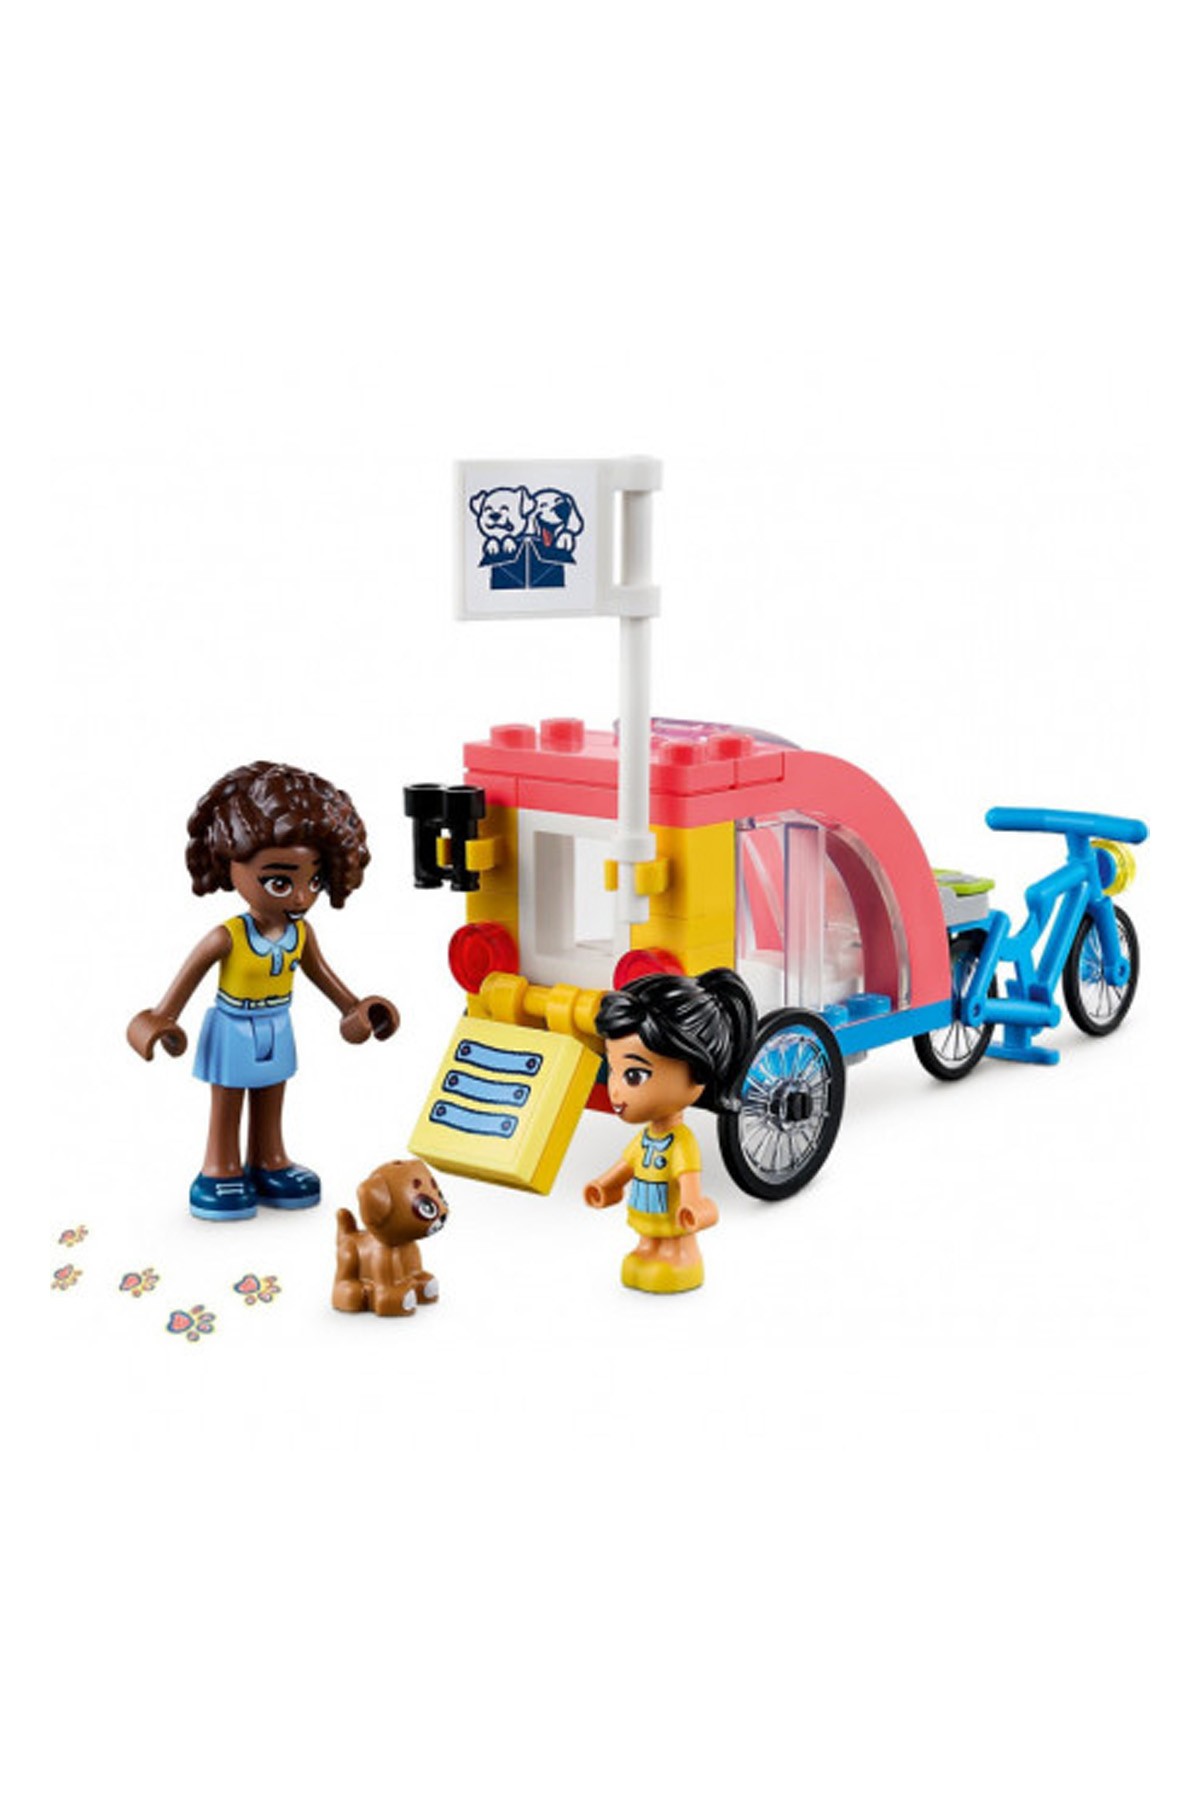 Lego Friends Köpek Kurtarma Bisikleti 41738